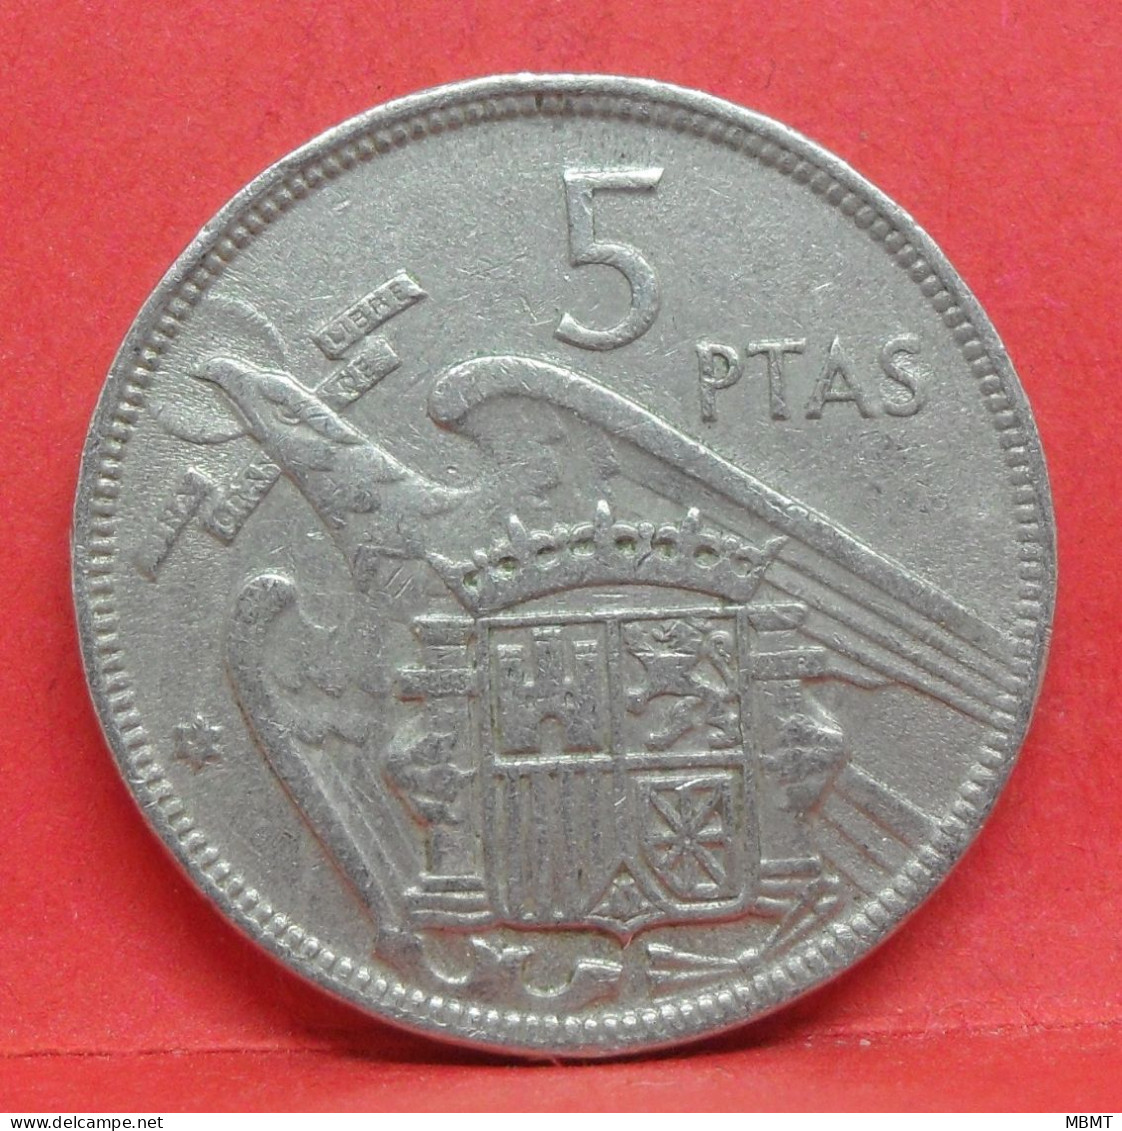 5 Pesetas 1957 étoile 67 - TB - Pièce Monnaie Espagne - Article N°2343 - 5 Pesetas